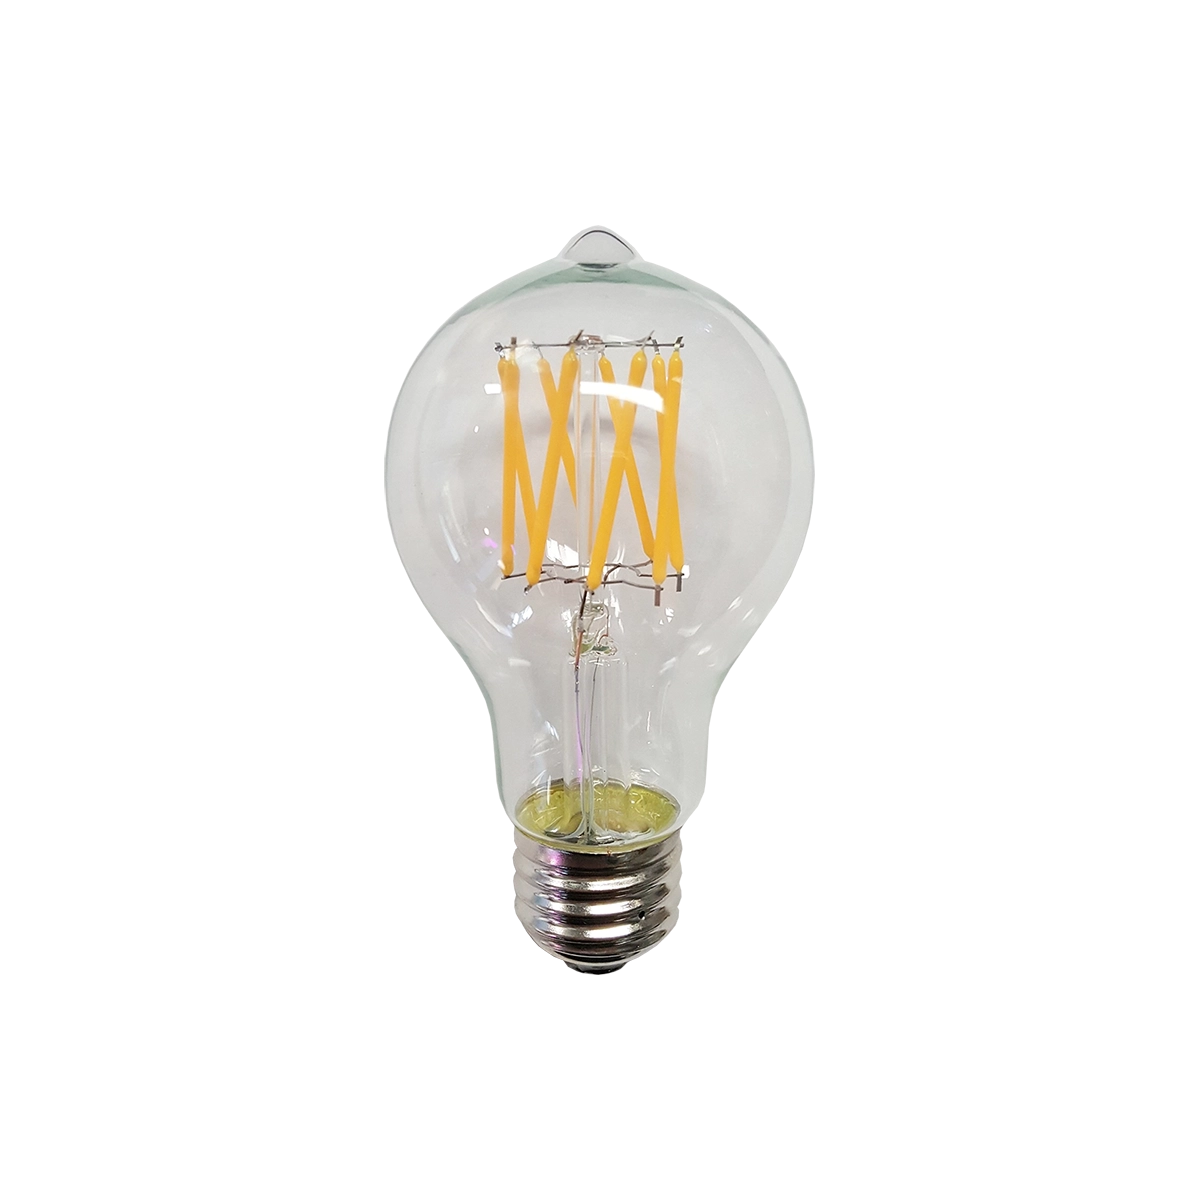 Decorative LED Bulbs